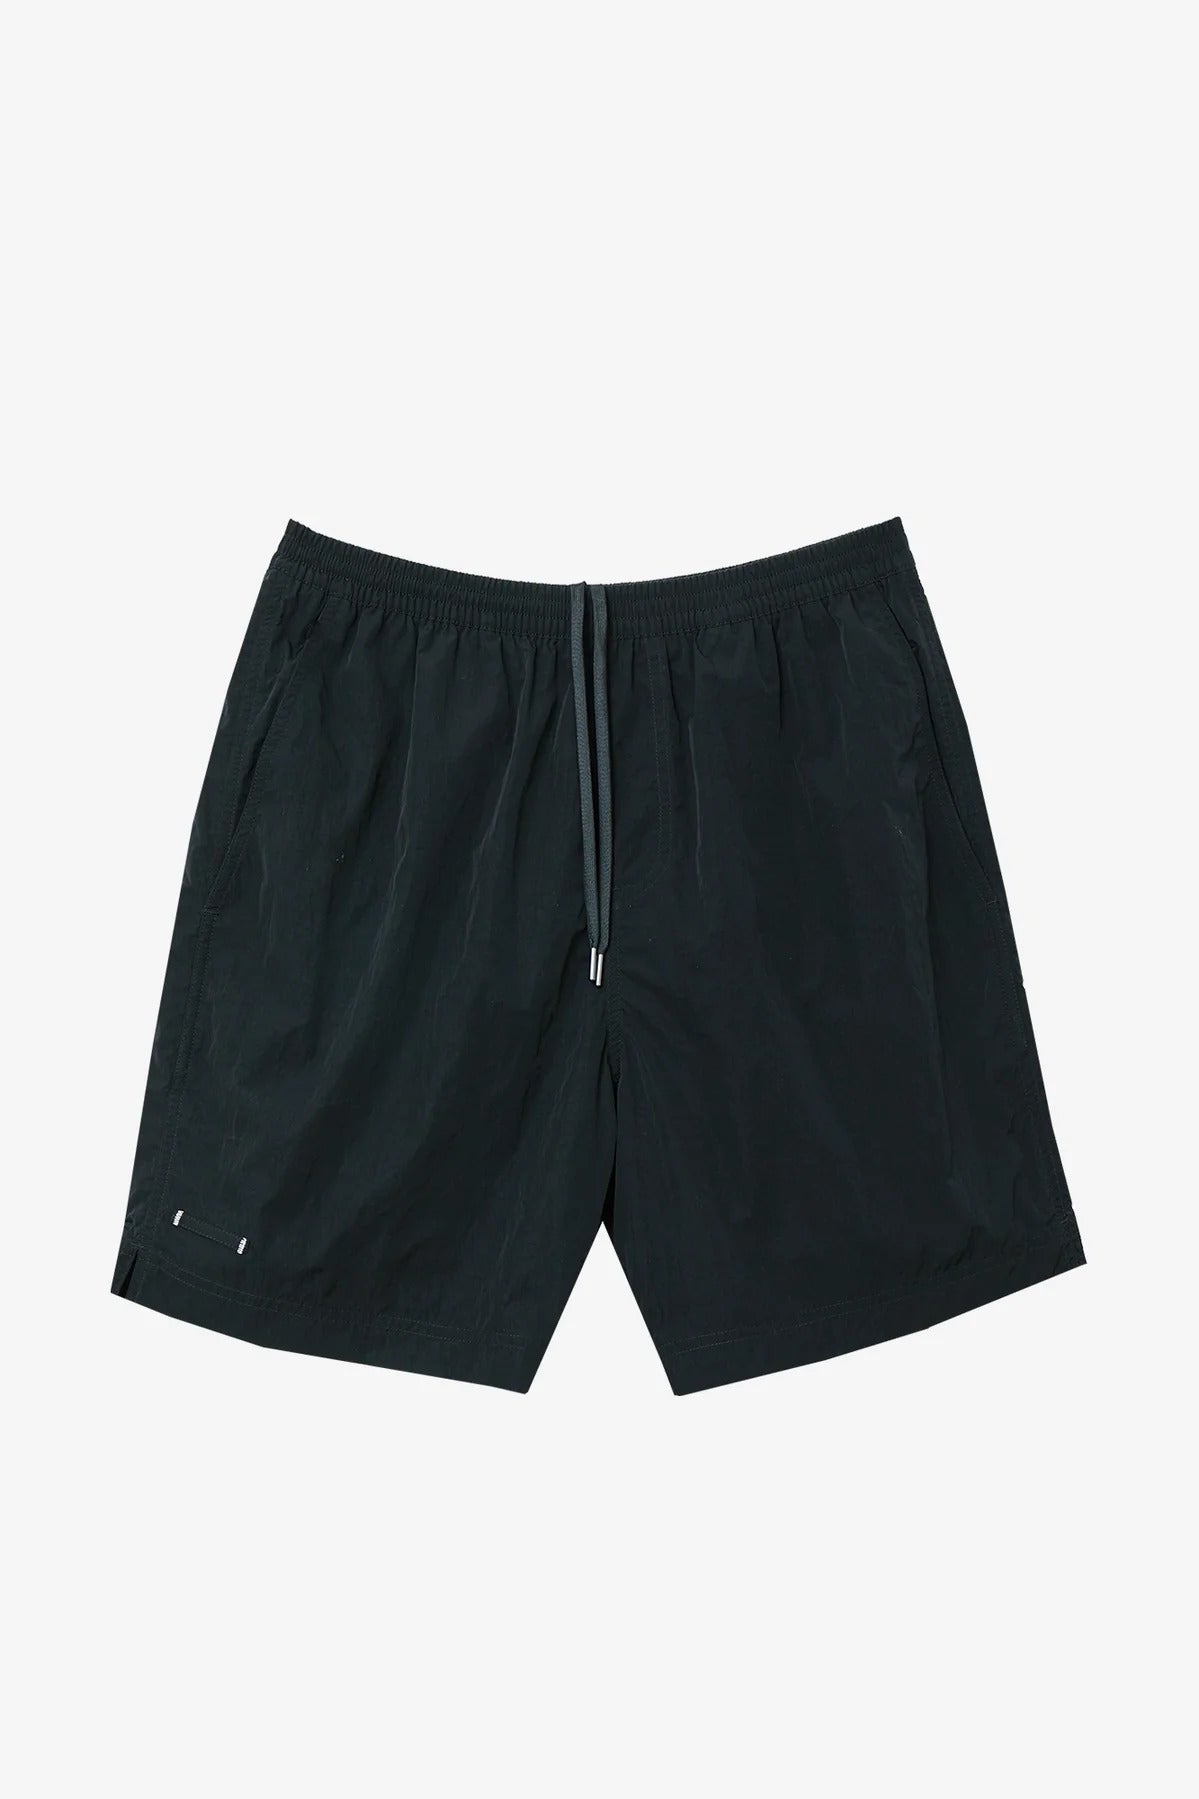 Jet black classic swim shorts